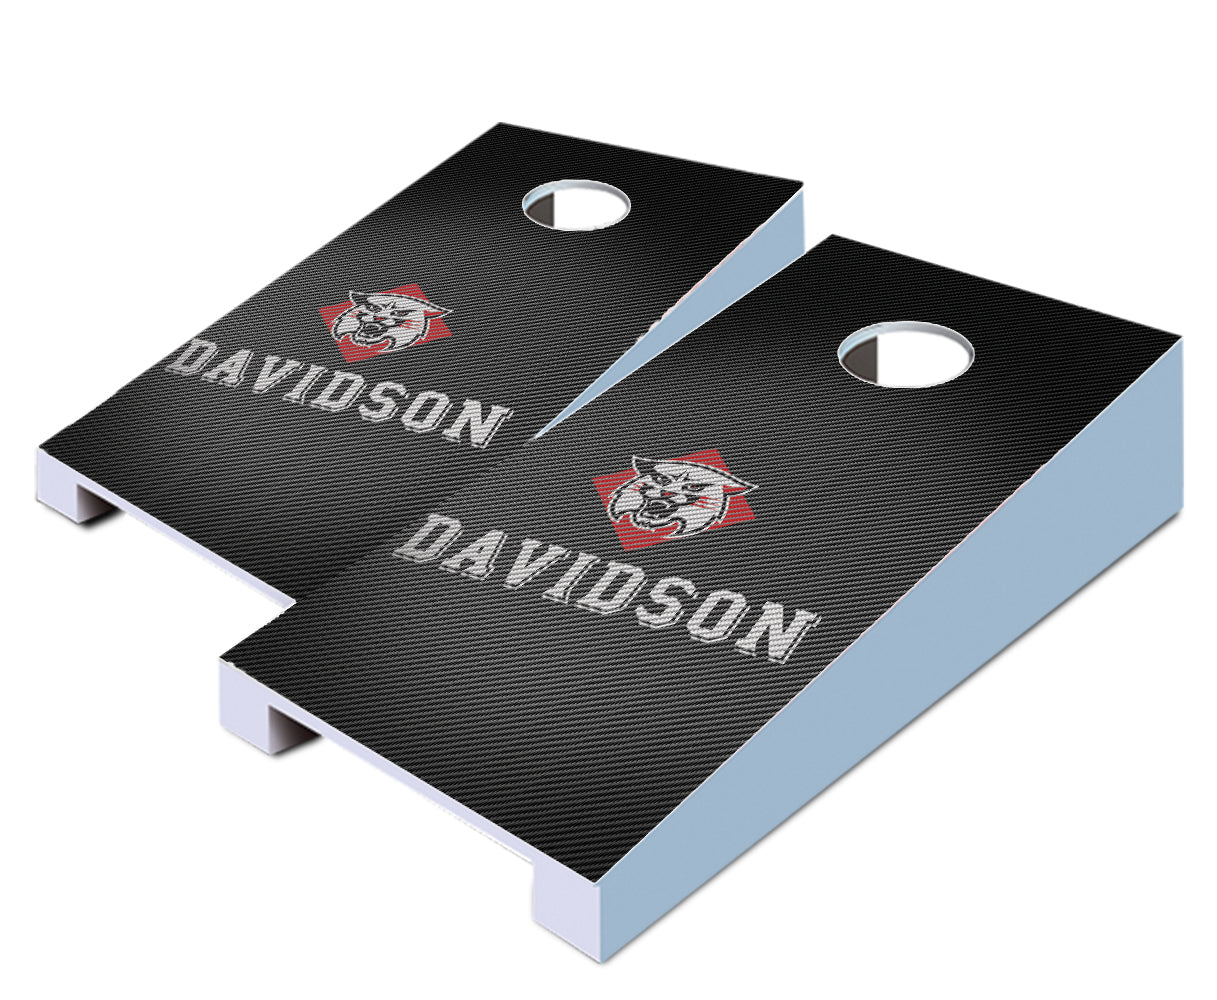 "Davidson Slanted" Tabletop Cornhole Boards